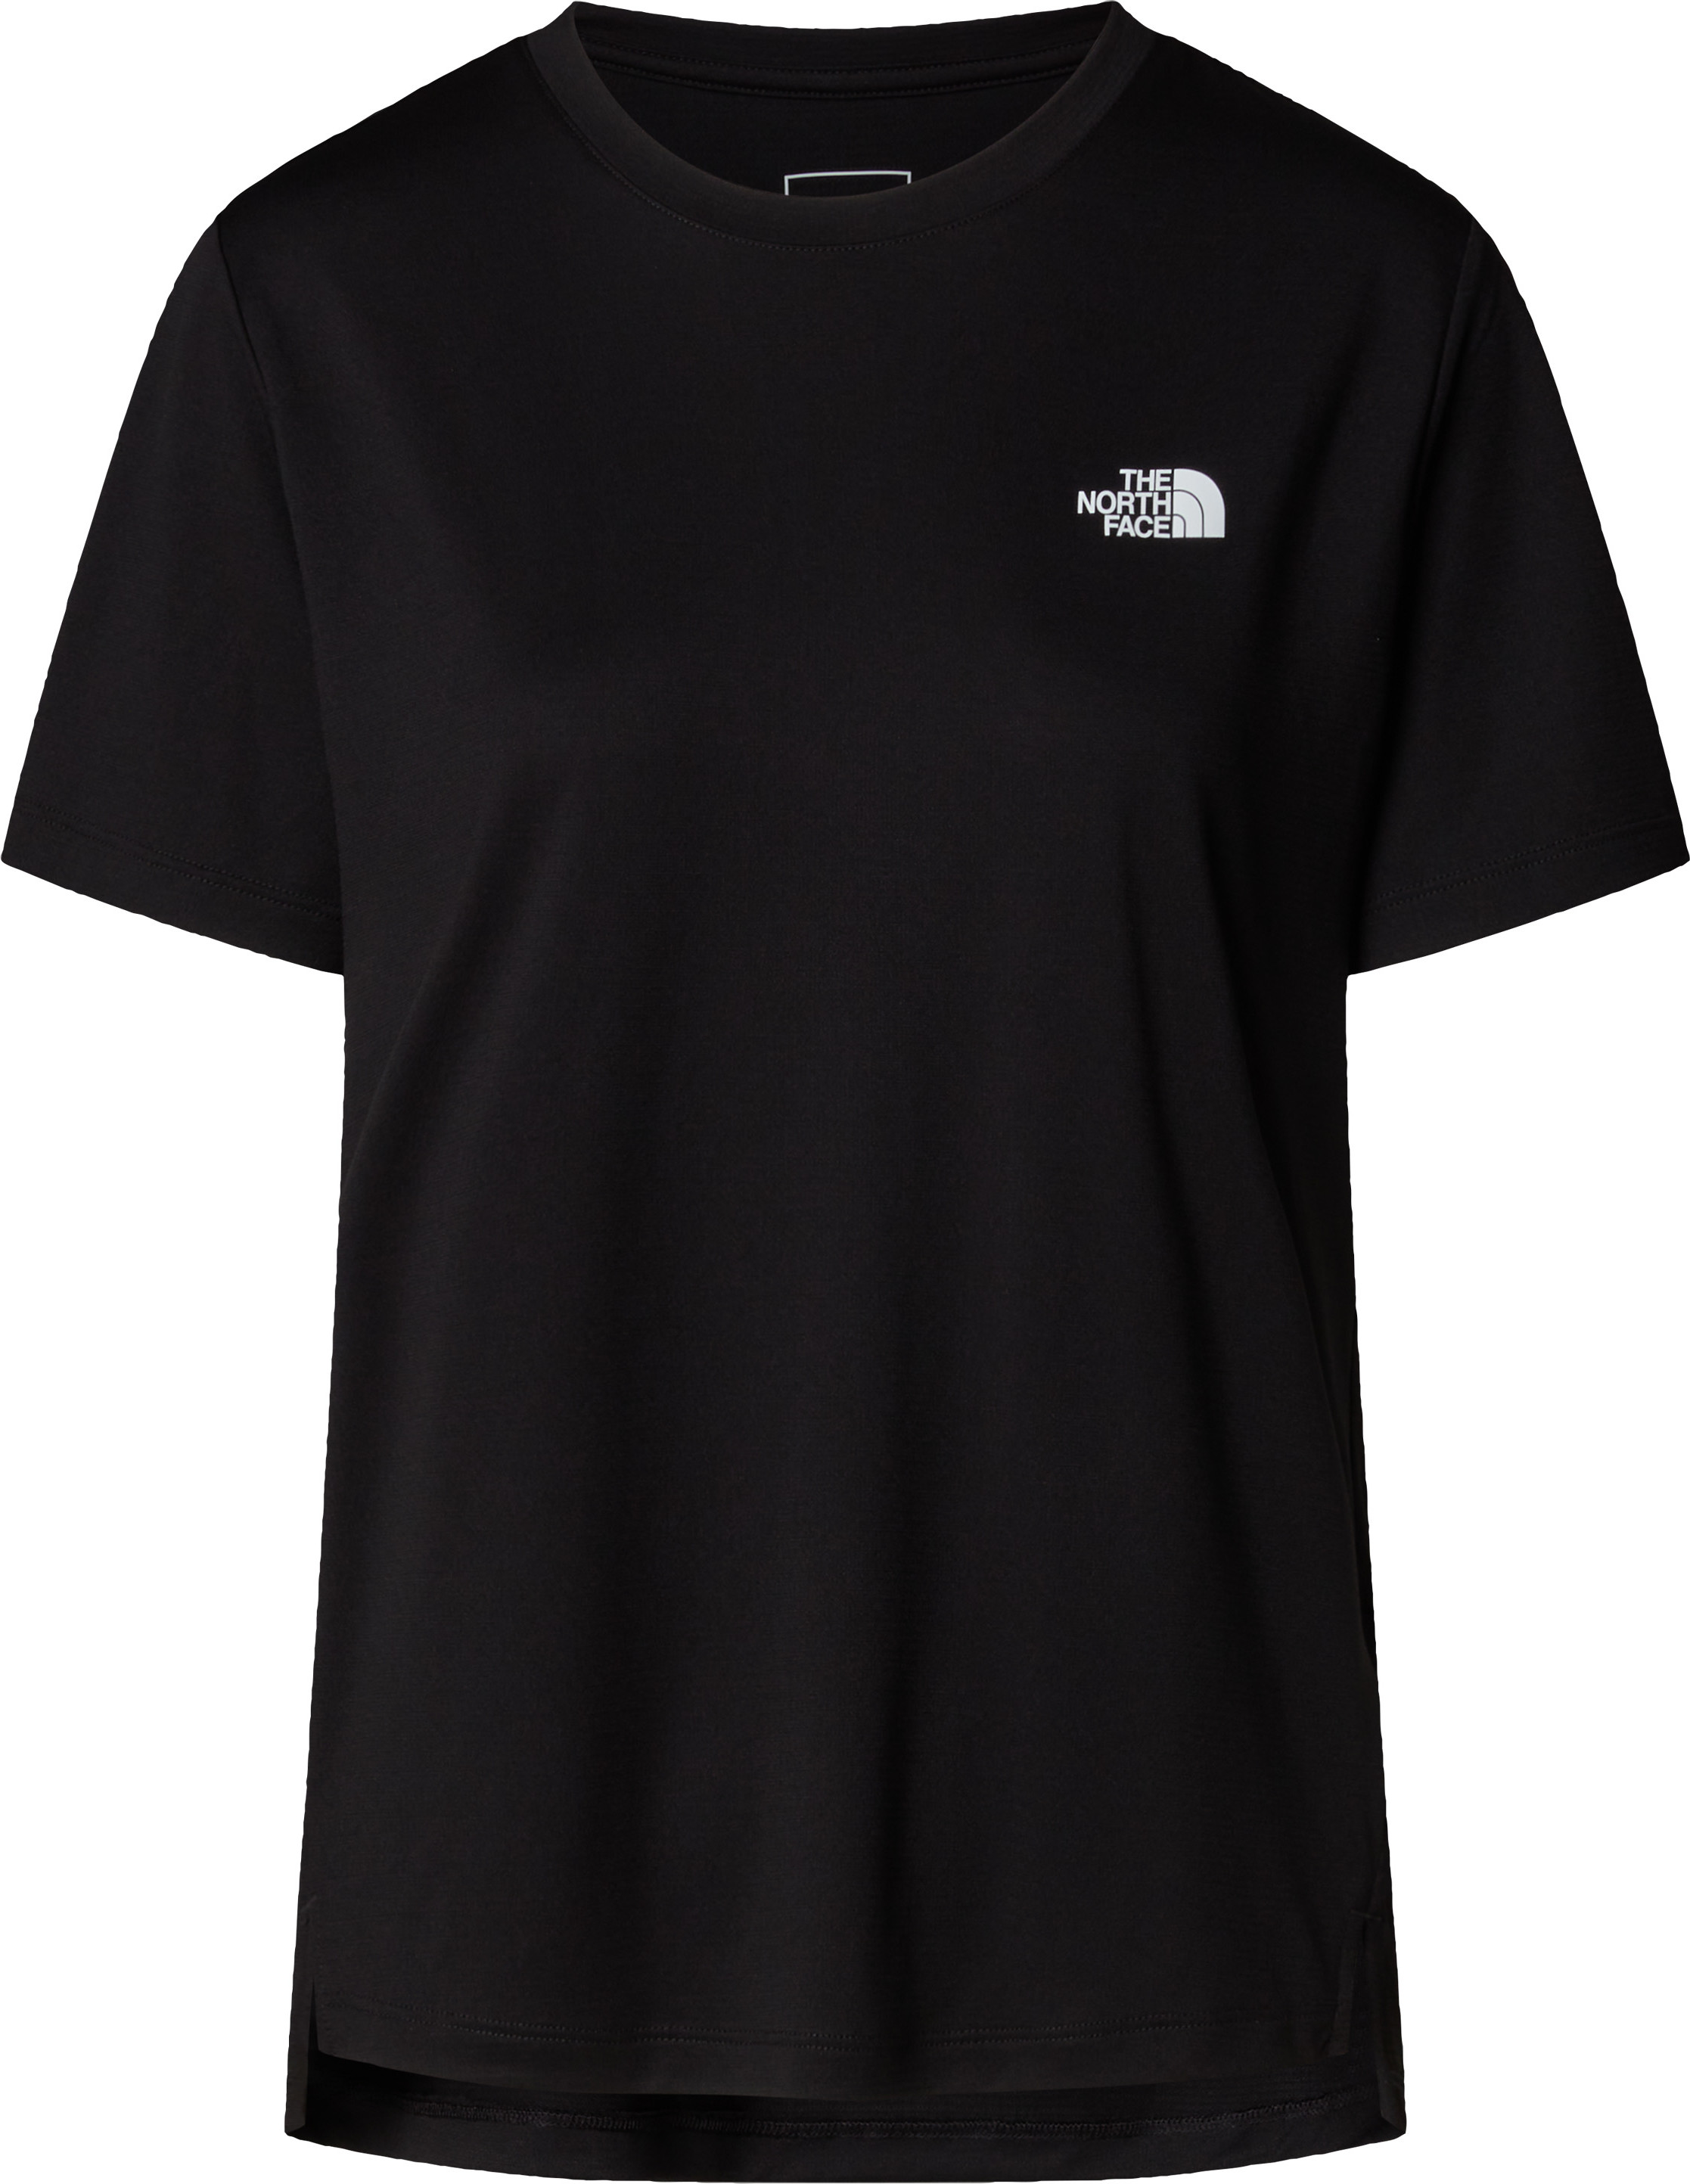 The North Face Women’s Flex T-Shirt TNF Black